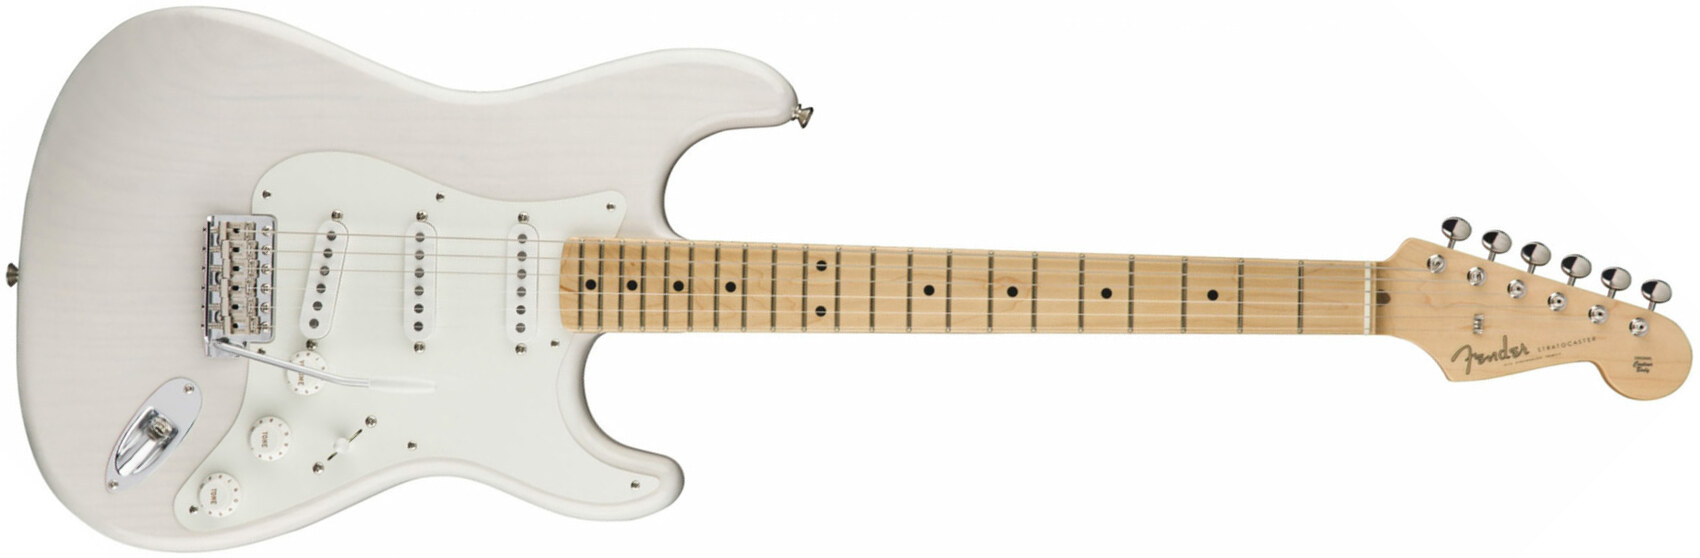 Fender Strat '50s American Original Usa Sss Mn - White Blonde - Str shape electric guitar - Main picture